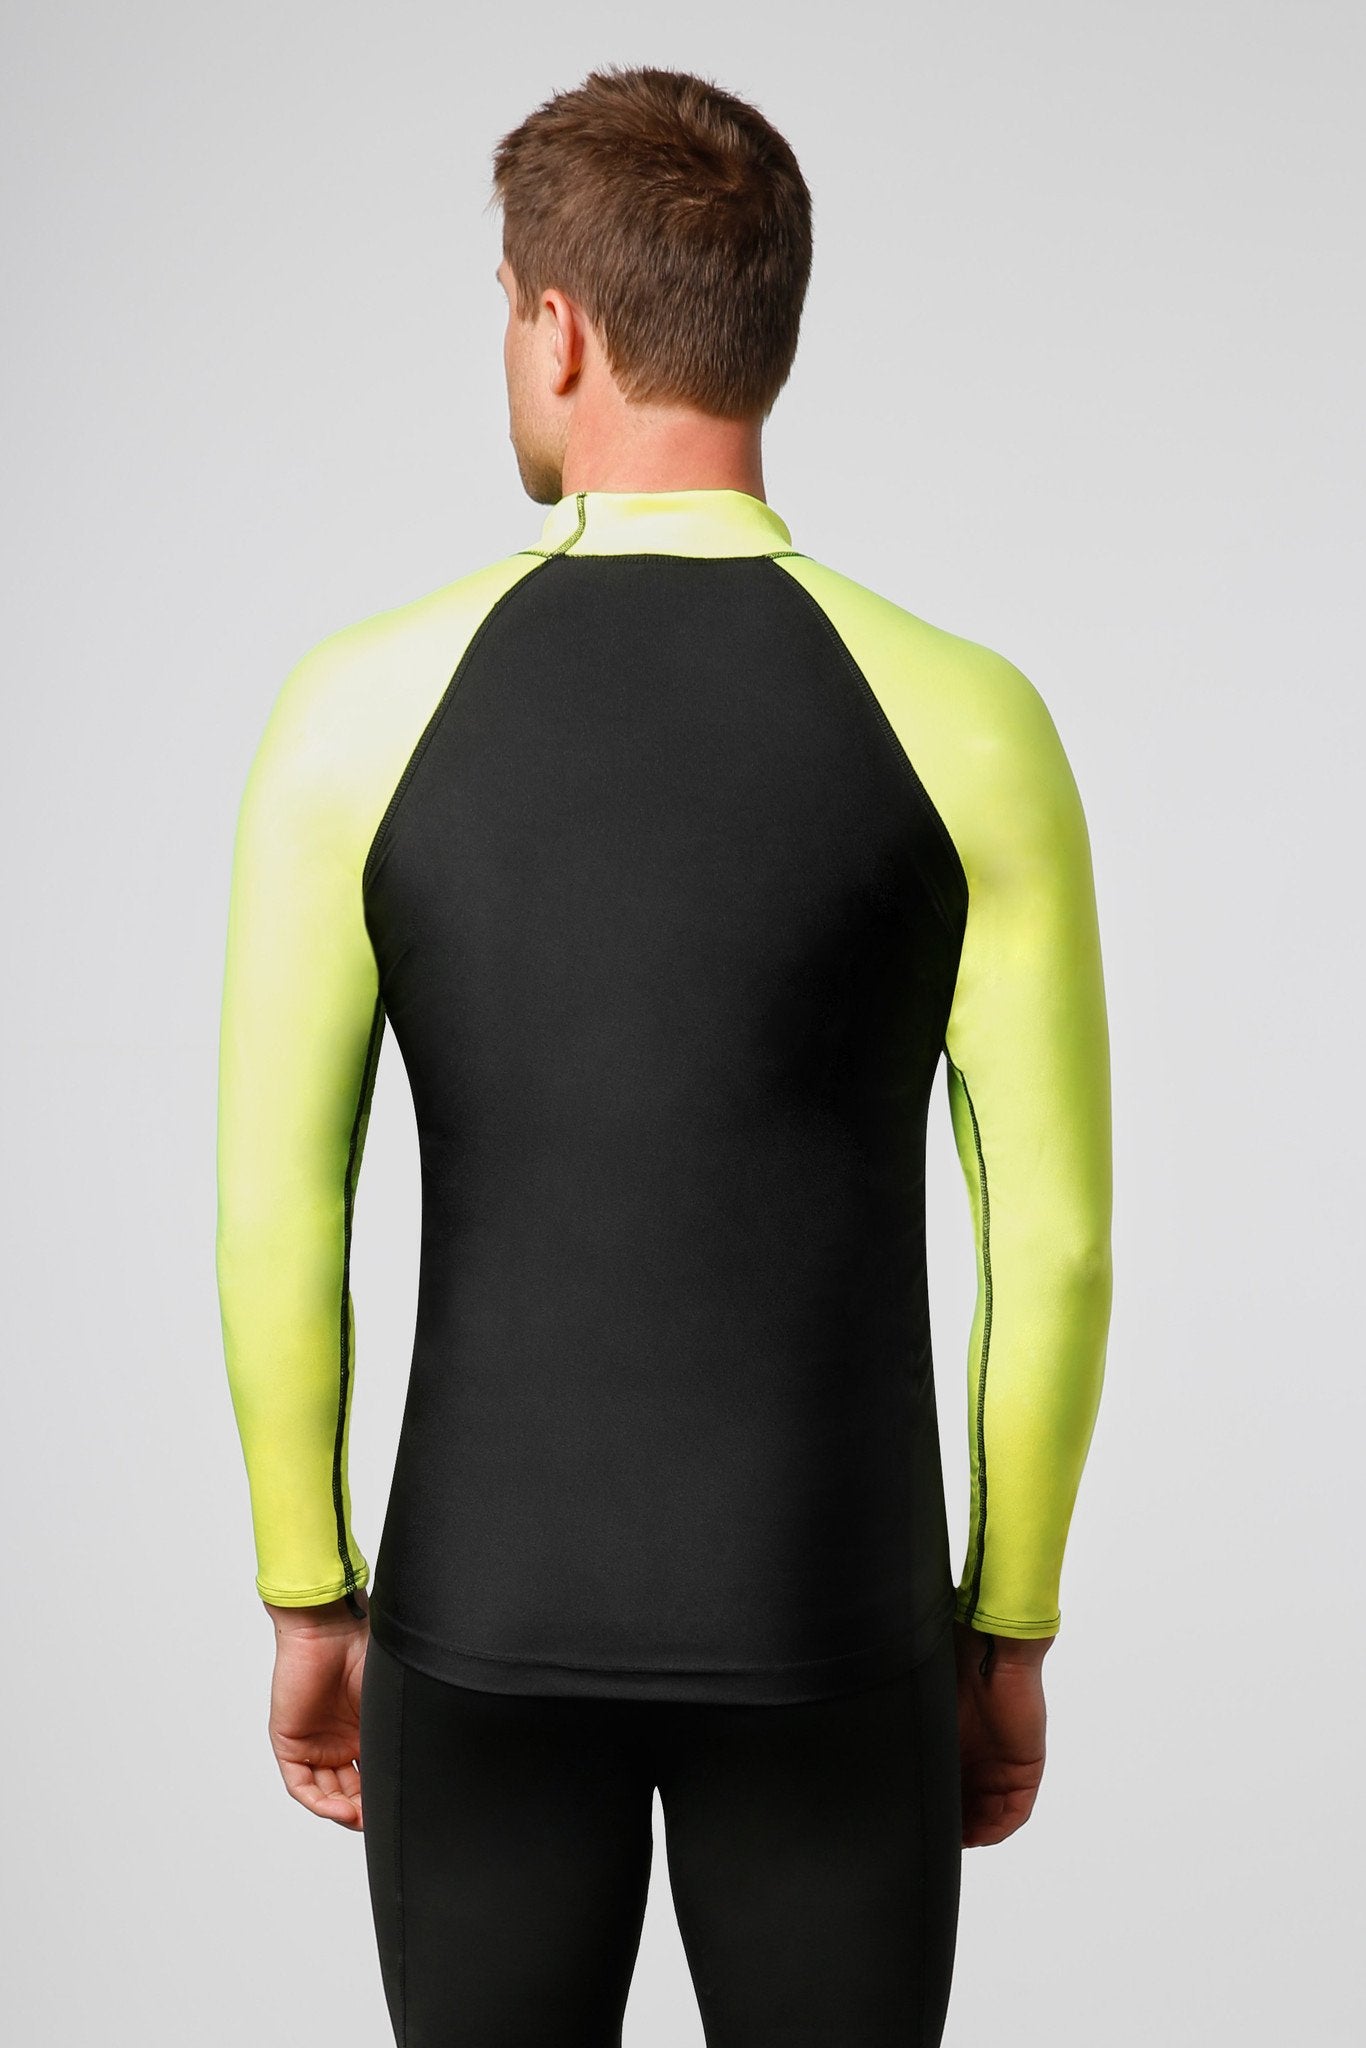 P35B Raglan Long Sleeve Vest with Fuzzy Collar (Unisex)-Top-wetsuit, diver, sharkskin, snorkeling gear, watersports equipment, diving fins, snorkeling mask, ocean reef, Garmin G1